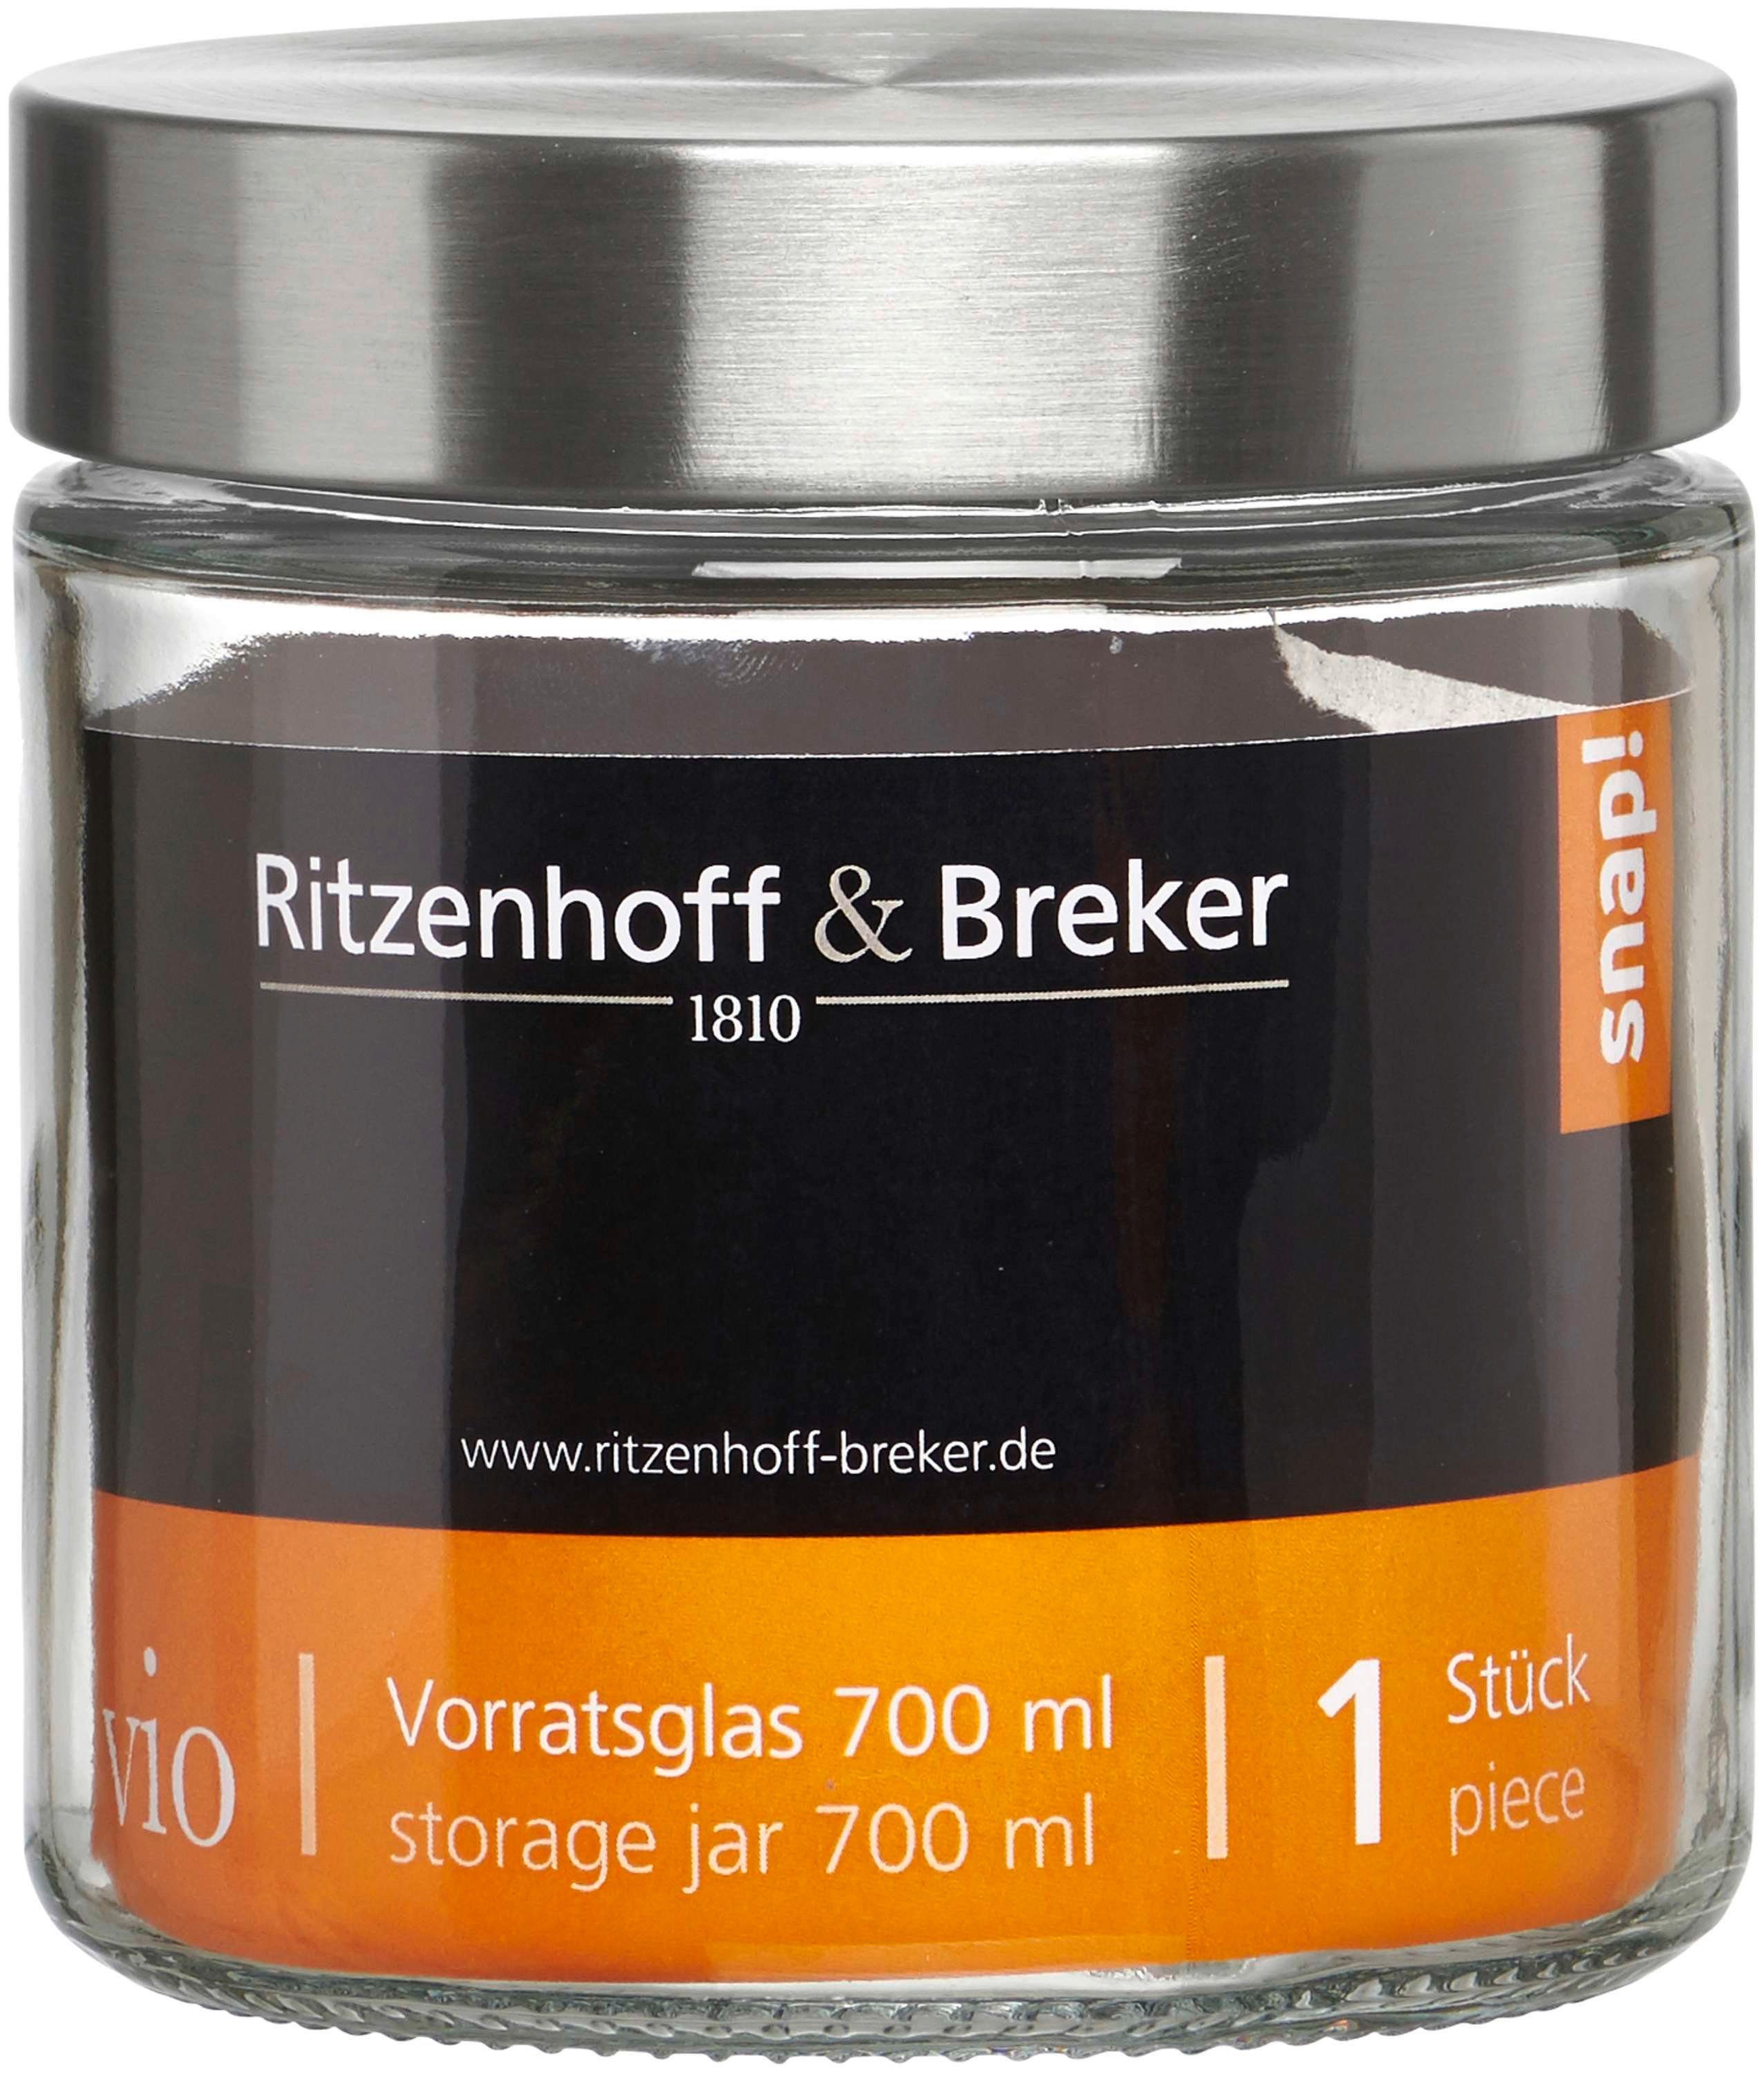 Ritzenhoff & Breker Vorratsdose Vio Vorratsglas rund glatt 700ml 812077, Glas